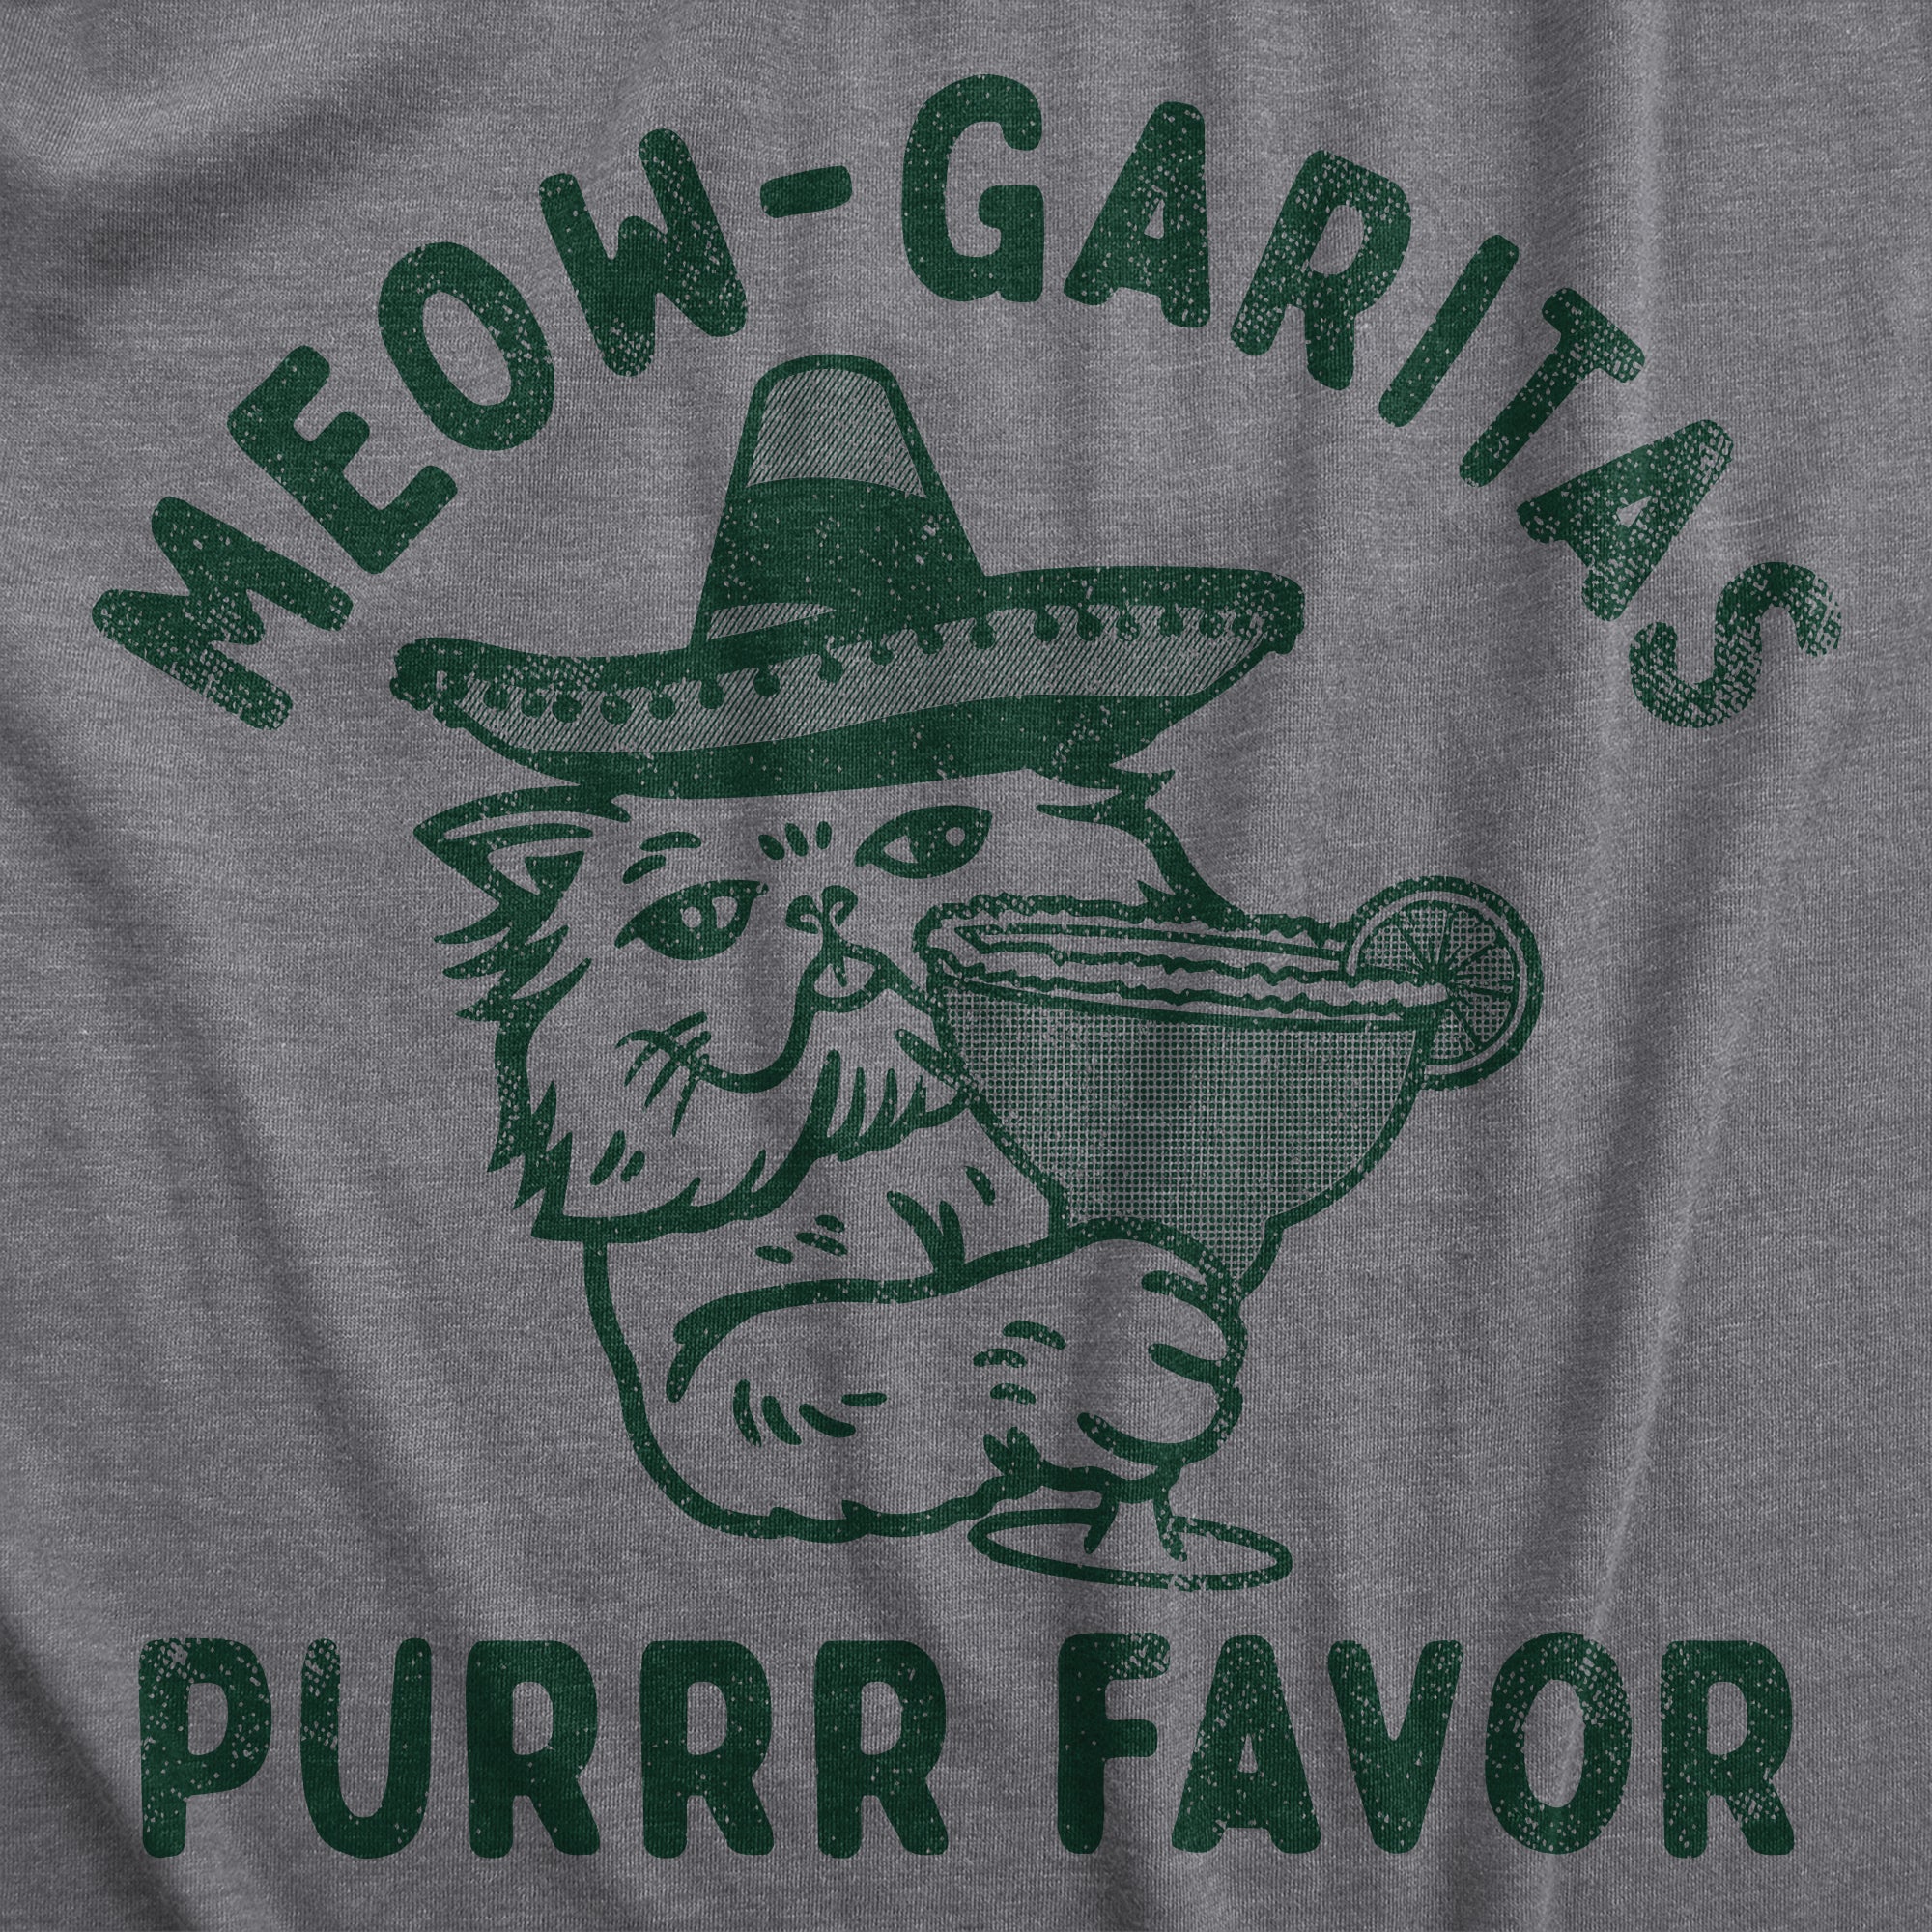 Funny Dark Heather Grey - MEOW Meow Garitas Purrr Favor Womens T Shirt Nerdy cat liquor Drinking Tee